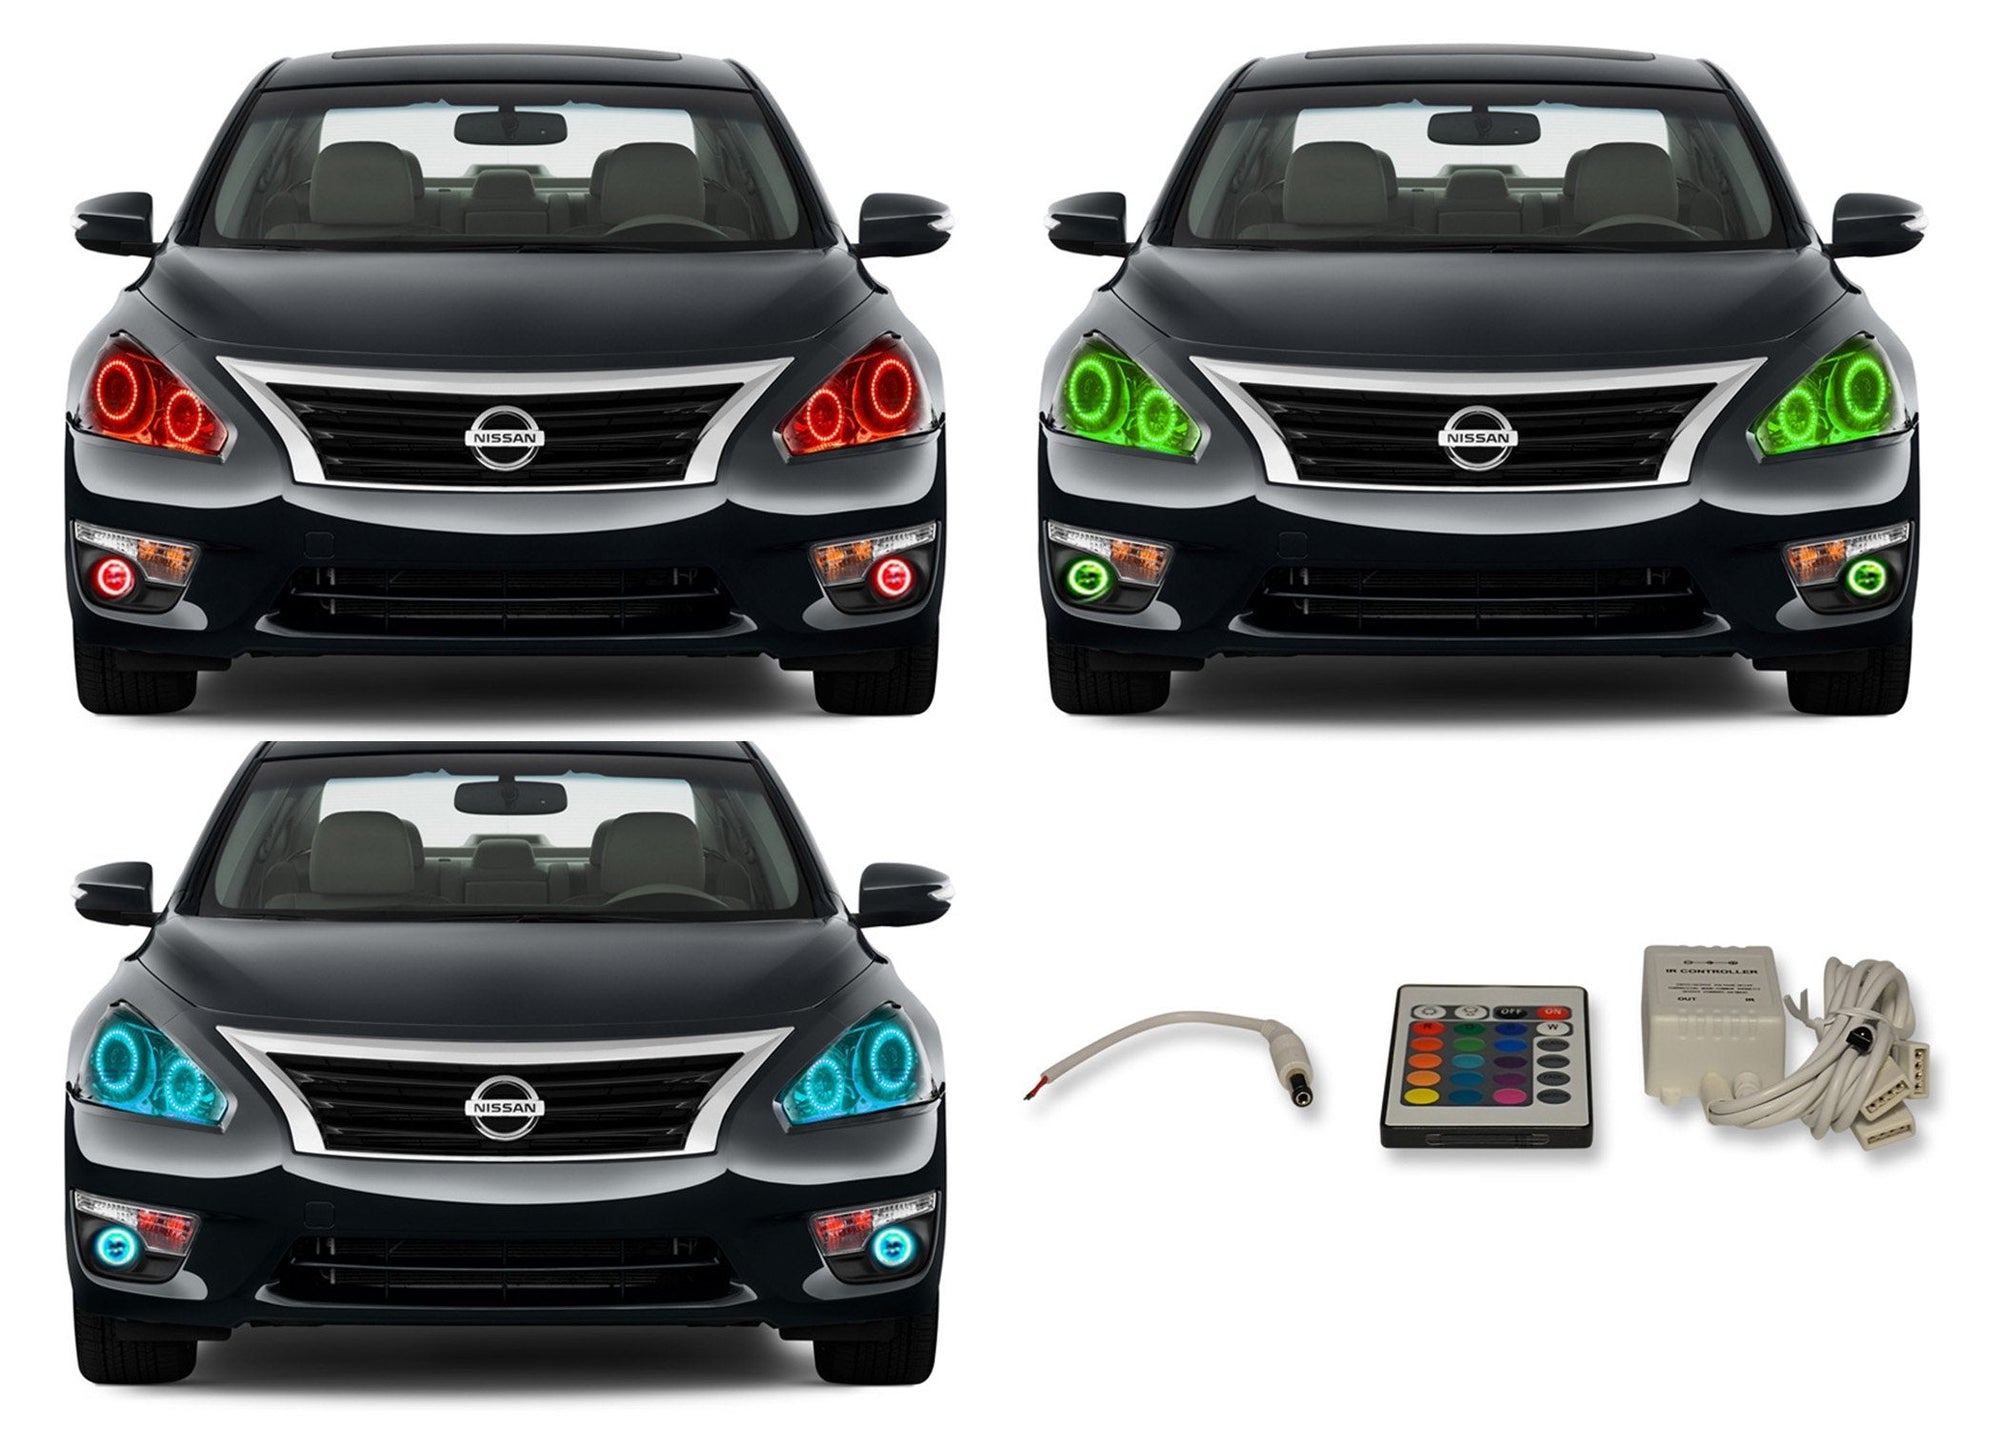 Nissan-Altima-2013, 2014, 2015-LED-Halo-Headlights and Fog Lights-RGB-IR Remote-NI-ALS1315-V3HFIR